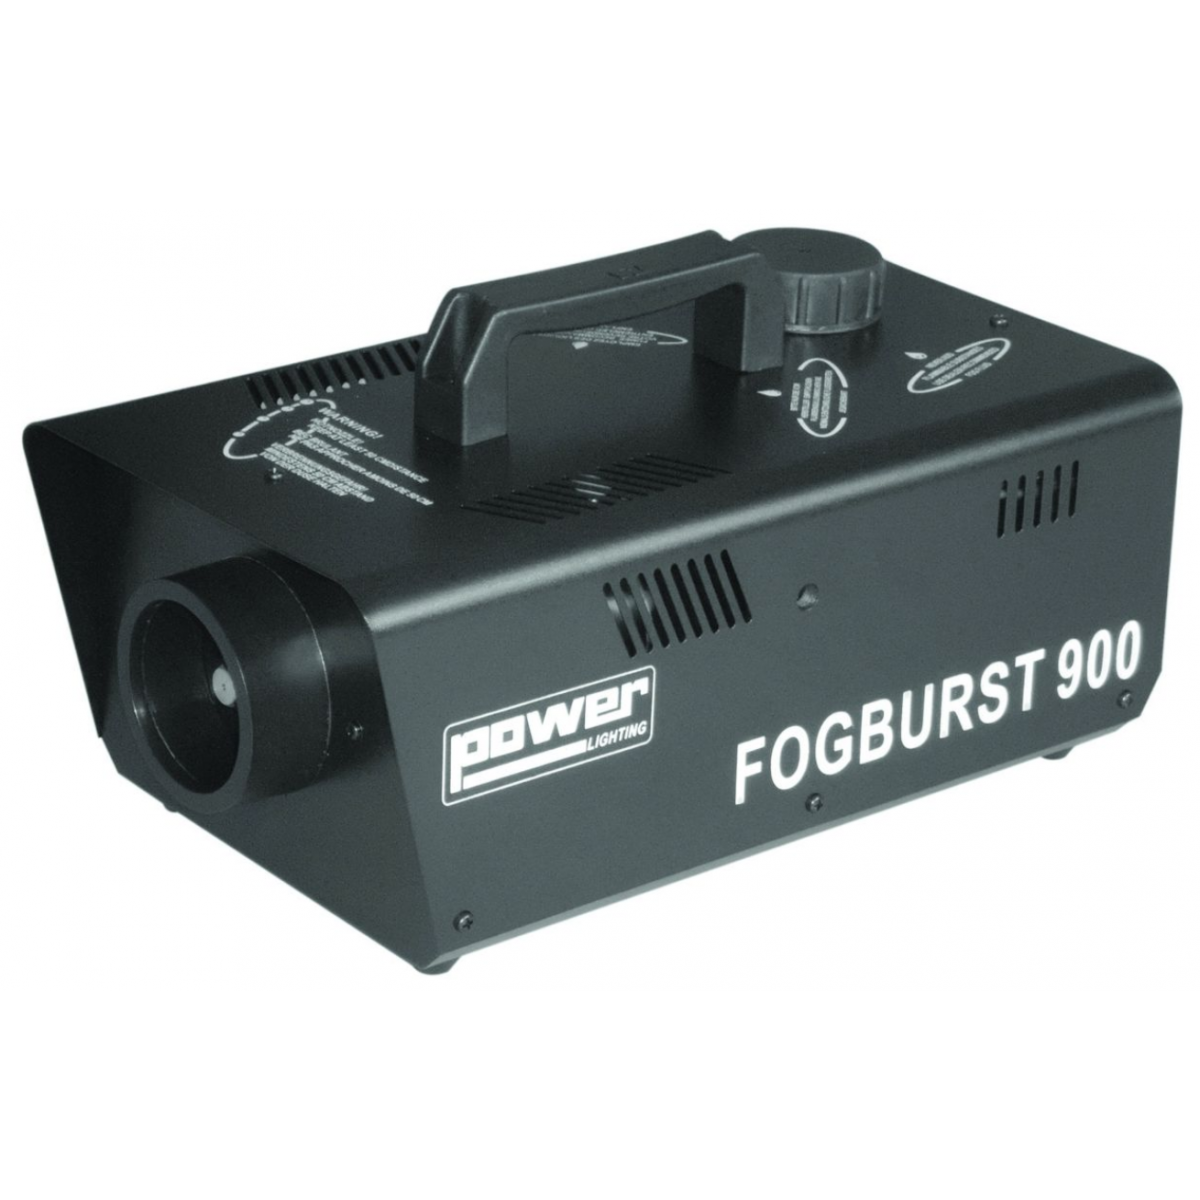 Notice d'utilisation, manuel d'utilisation et mode d'emploi Power Lighting Fogburst 900   